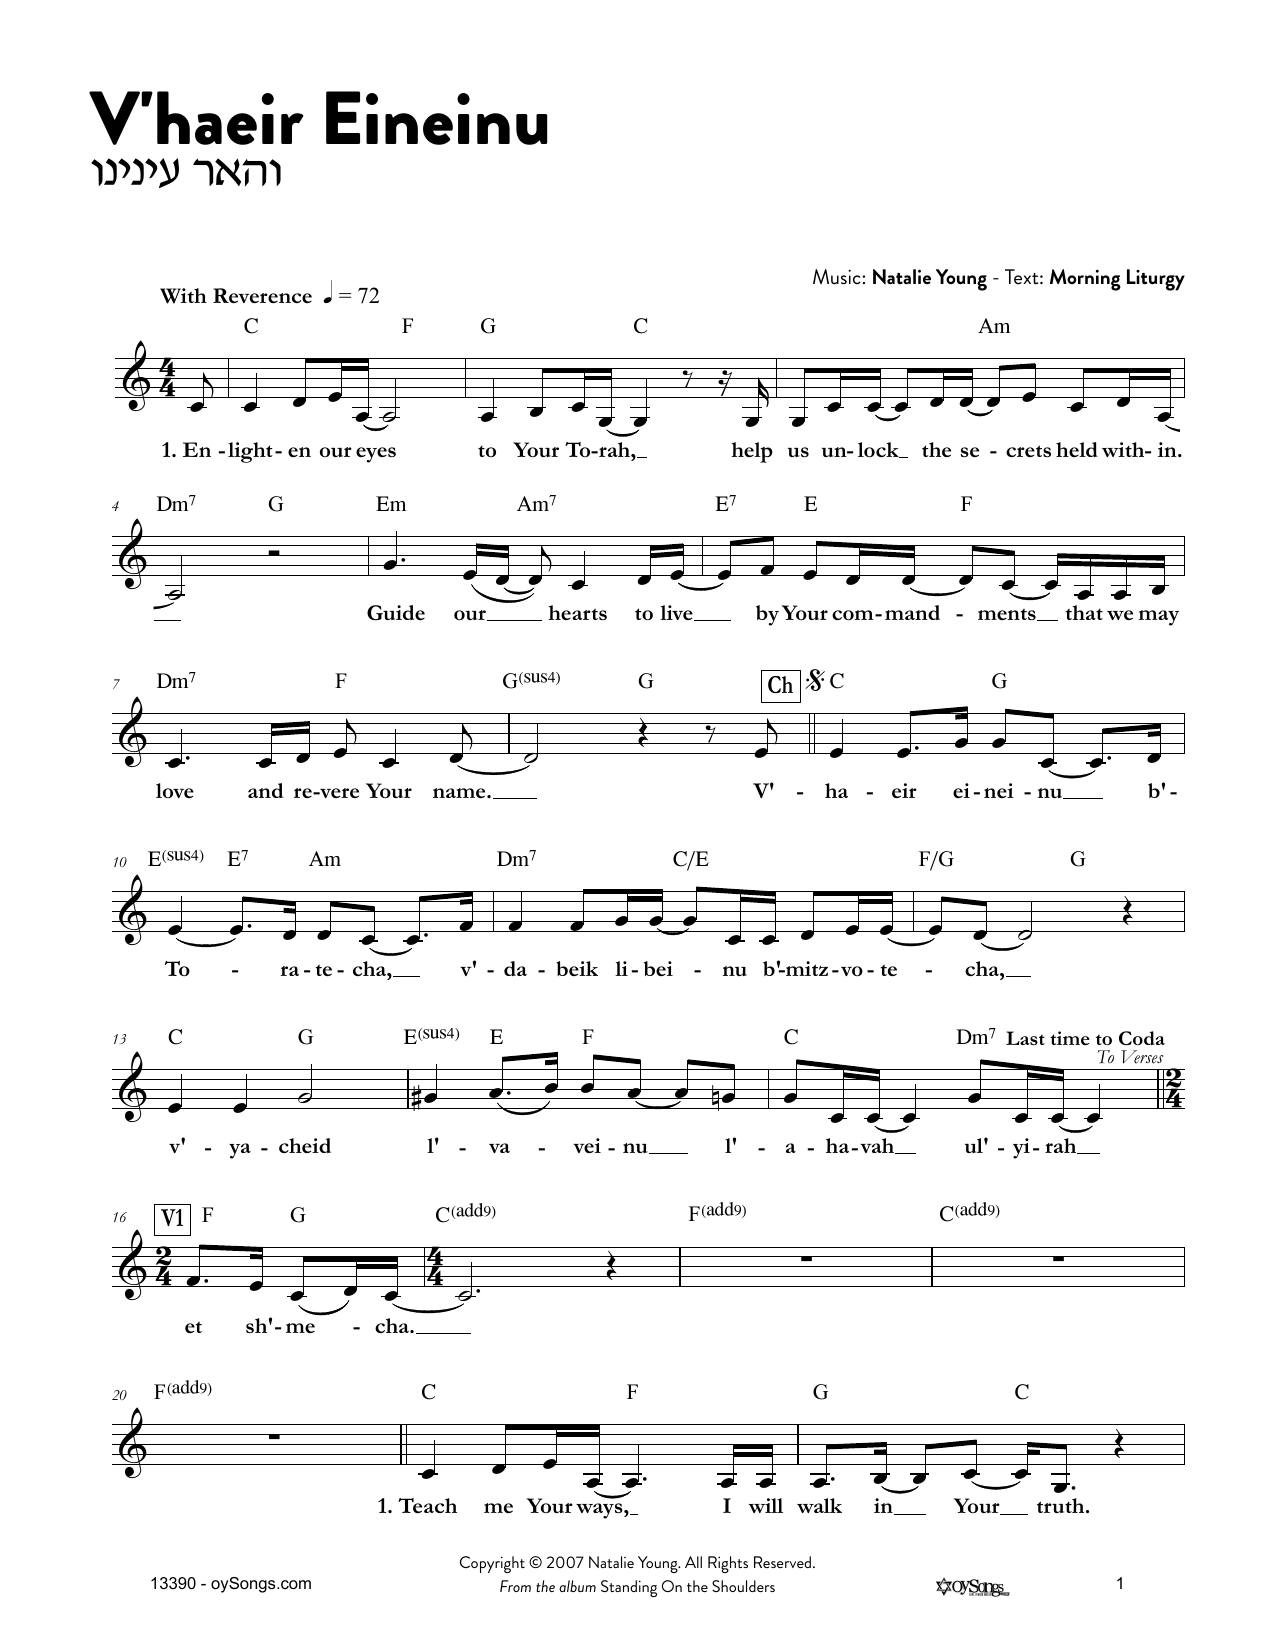 Natalie Young V'haeir Eineinu Sheet Music Notes & Chords for Melody Line, Lyrics & Chords - Download or Print PDF